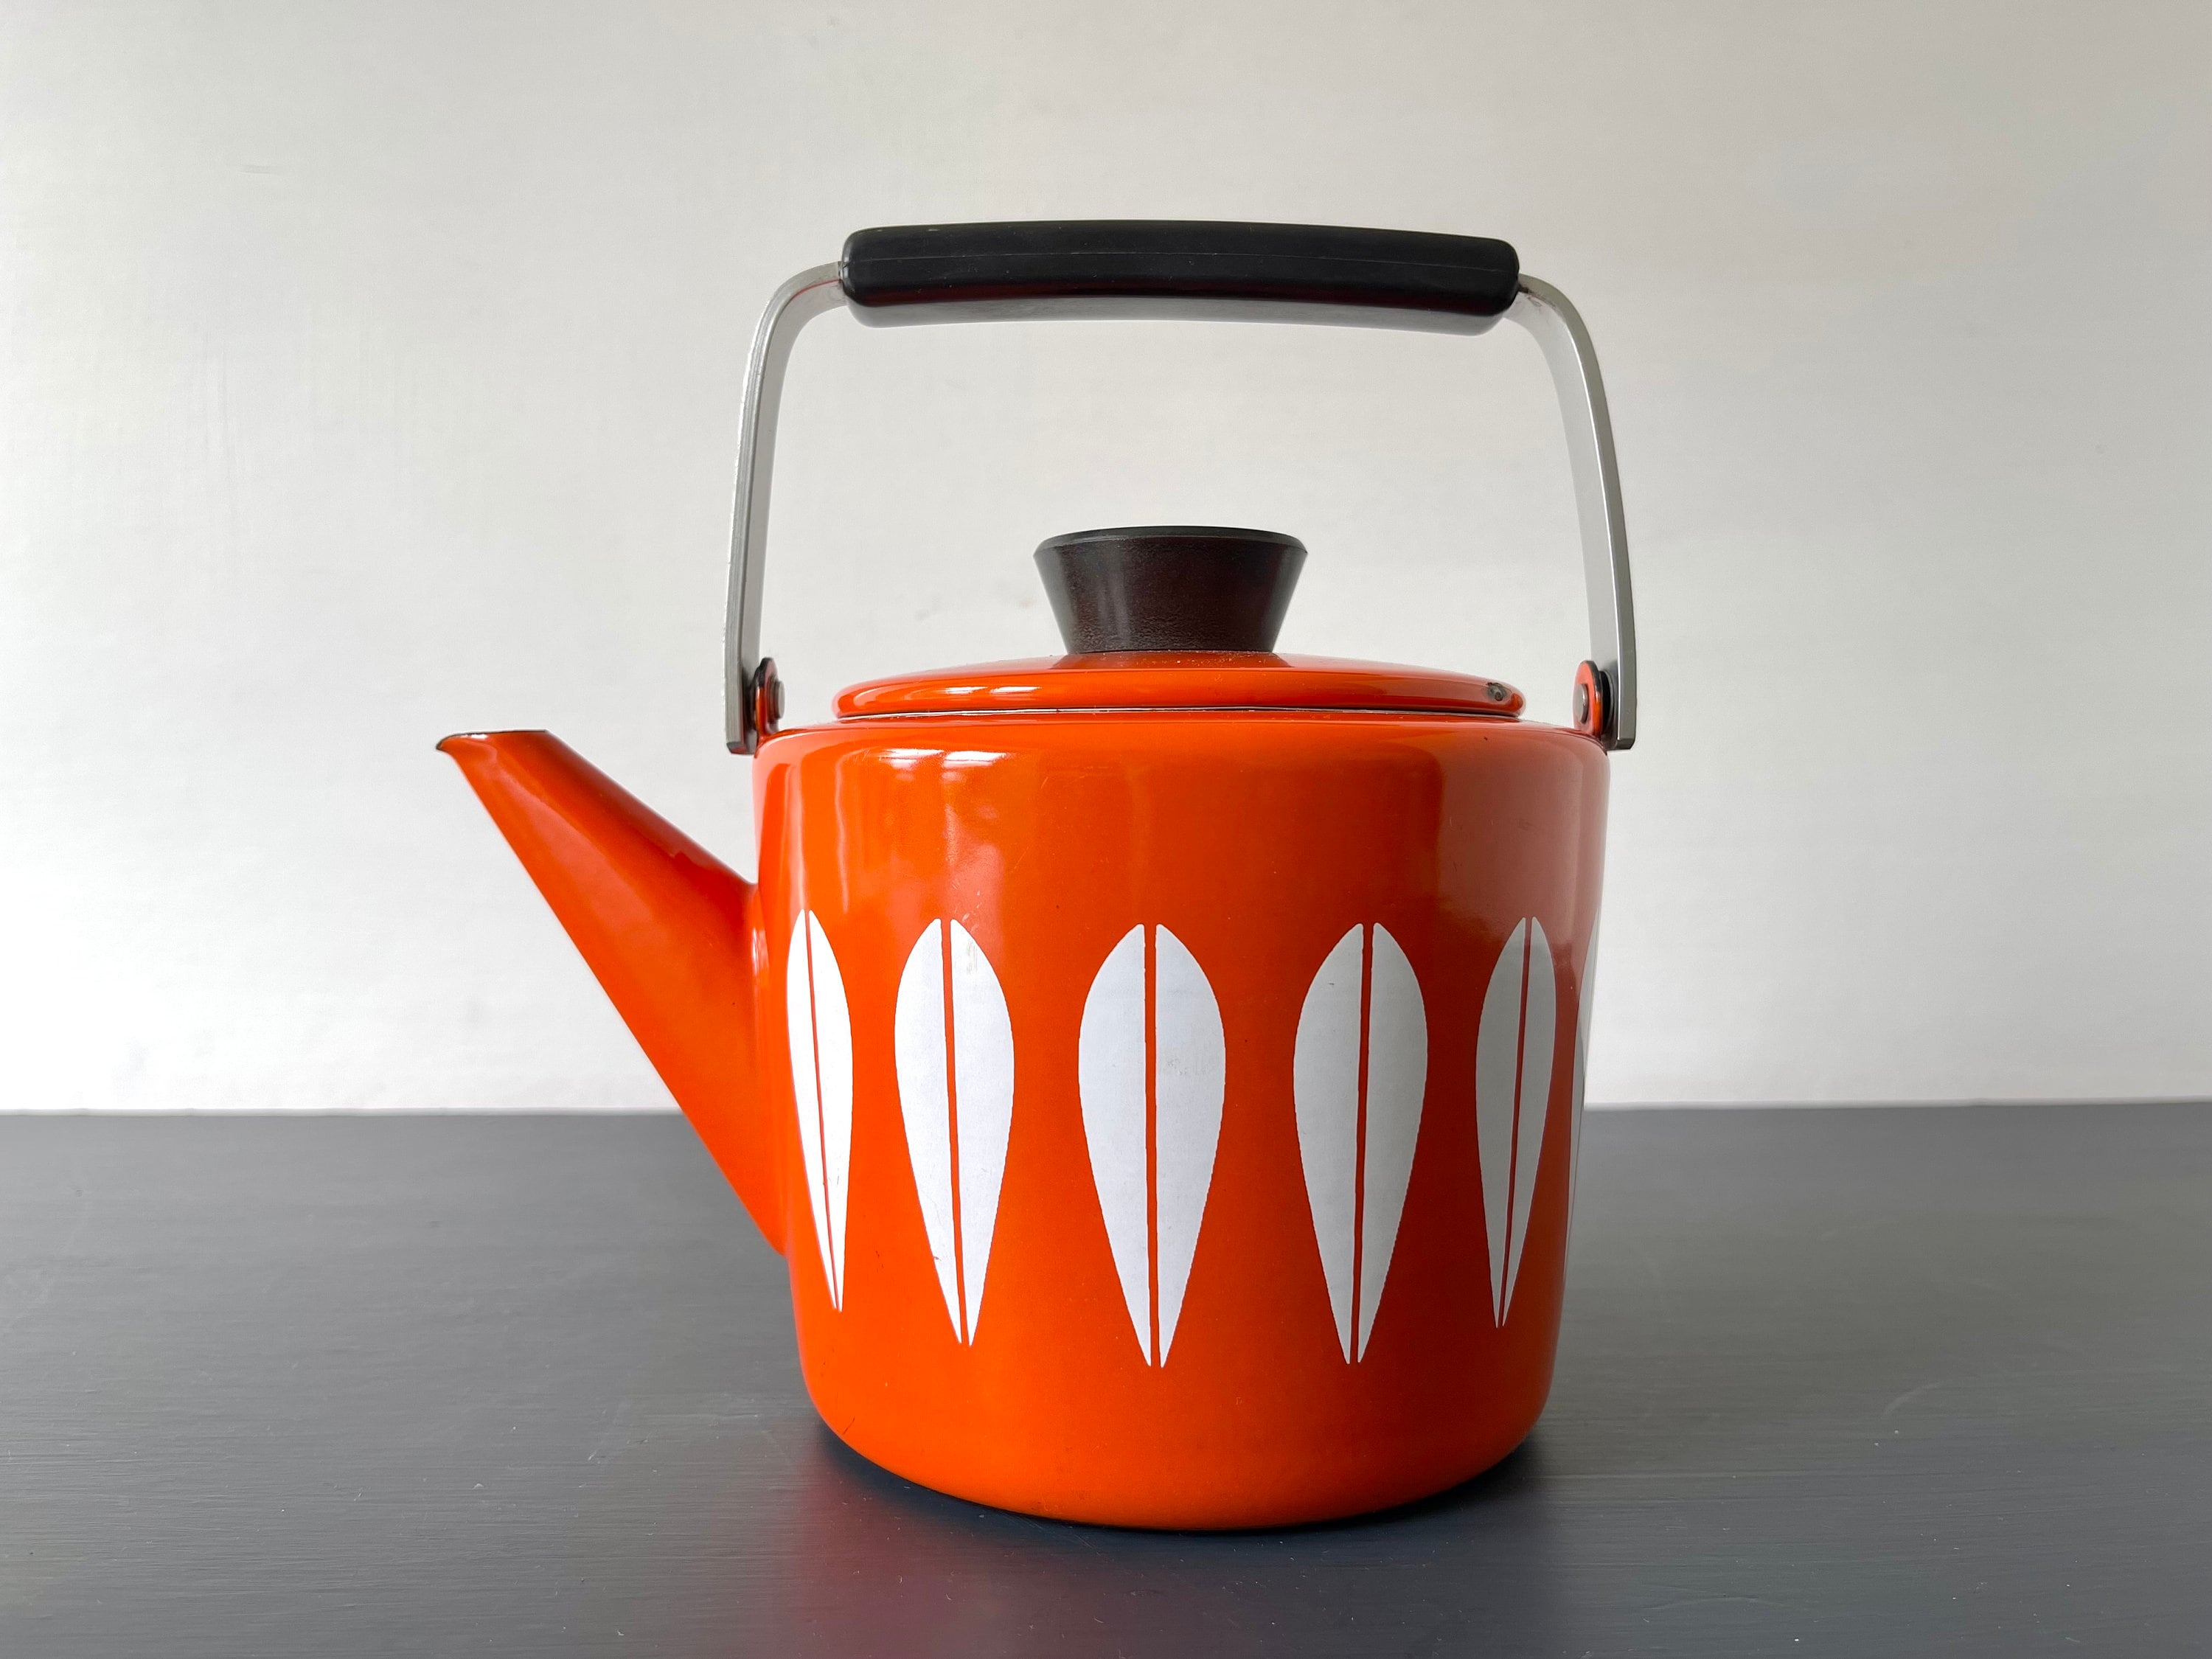 Lotus Kettle / Teapot by Cathrineholm of Norway Vintage Enamel Retro Orange  and White. MCM /mid Century Modern. Works on Induction 